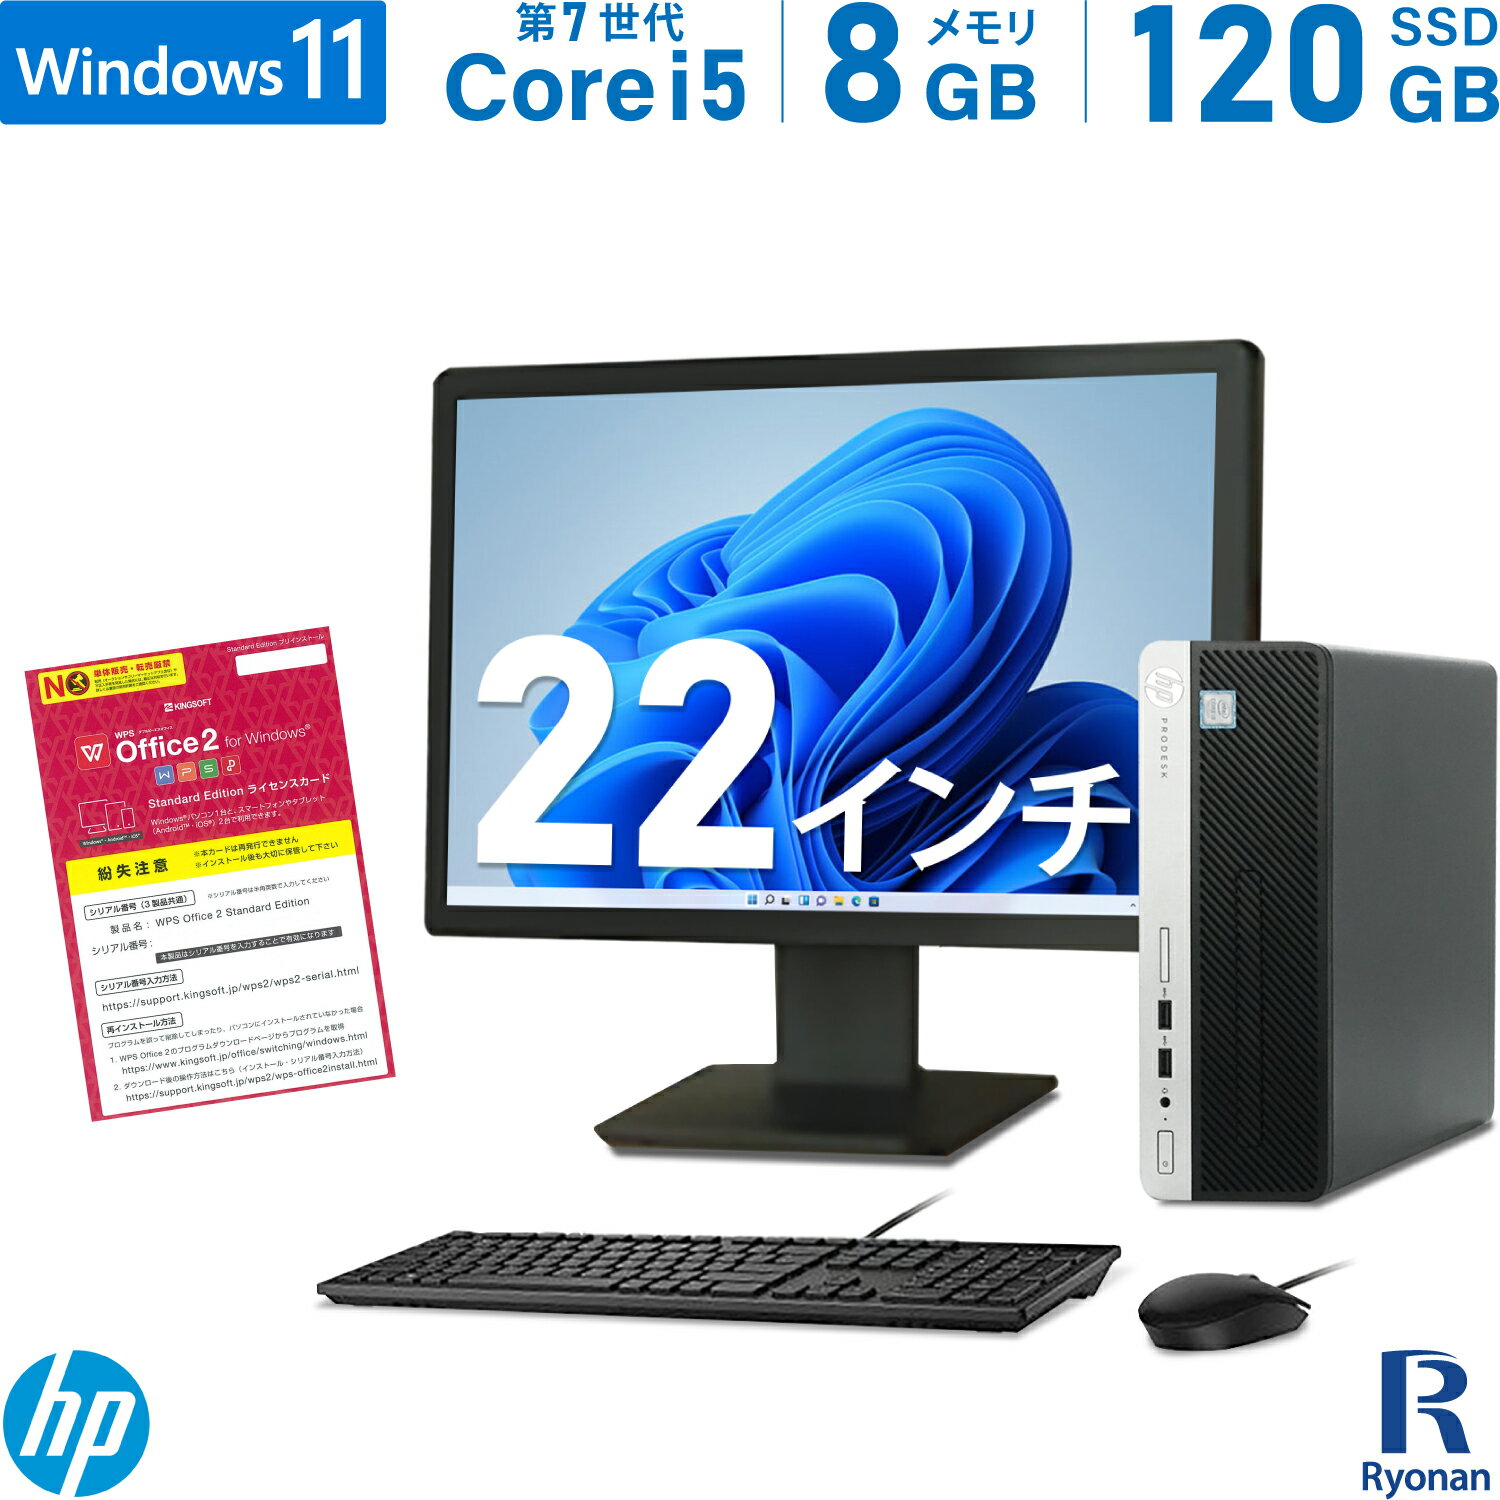 HP ProDesk 400 G4 SFF 第7世代 Core i5 メモリ:8GB 新品SSD:120GB デスクトップパソコン 22インチ 新品キーボード マウス DVD-ROM USB3.1 Office付 中古パソコン デスクトップ Windows 11 搭載 Windows 10 モニターセット